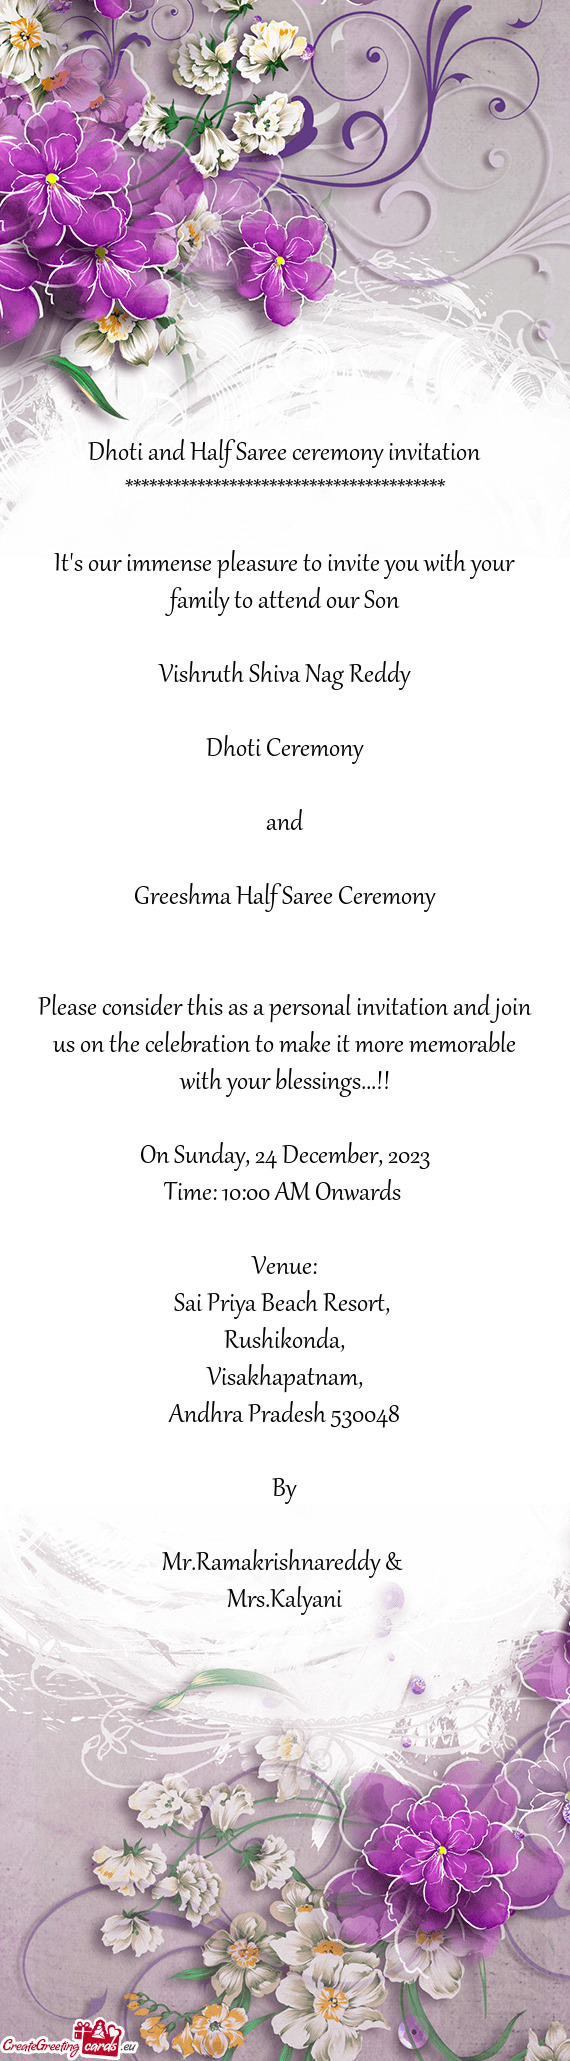 Greeshma Half Saree Ceremony